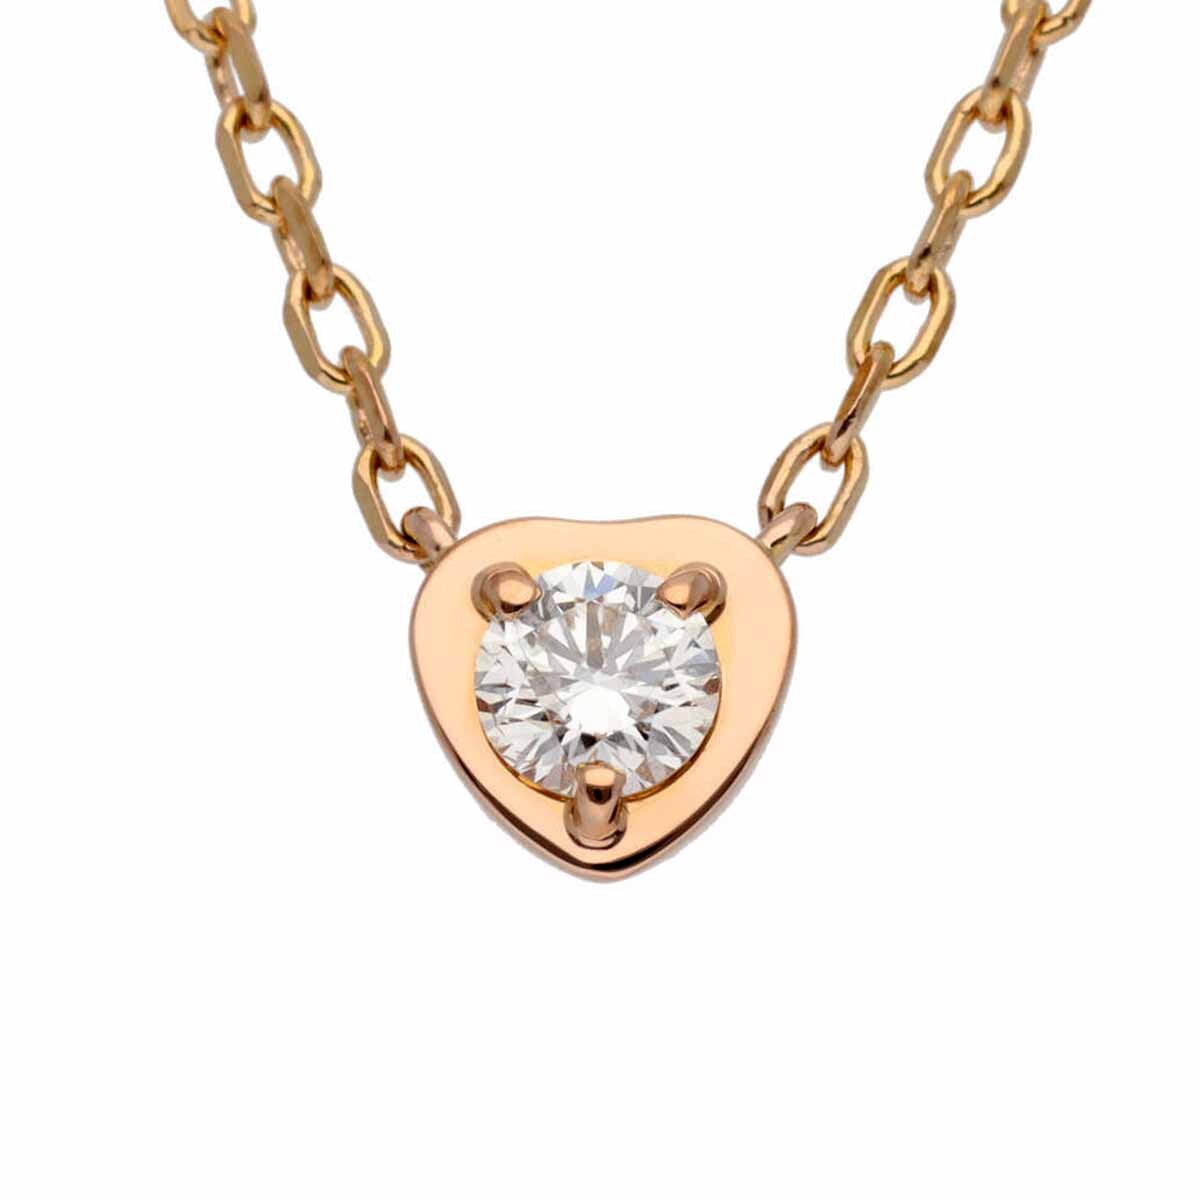 Cartier Cartier diamond ( approximately 0.14ct)tia man reje Heart necklace B7059400 K18 PG